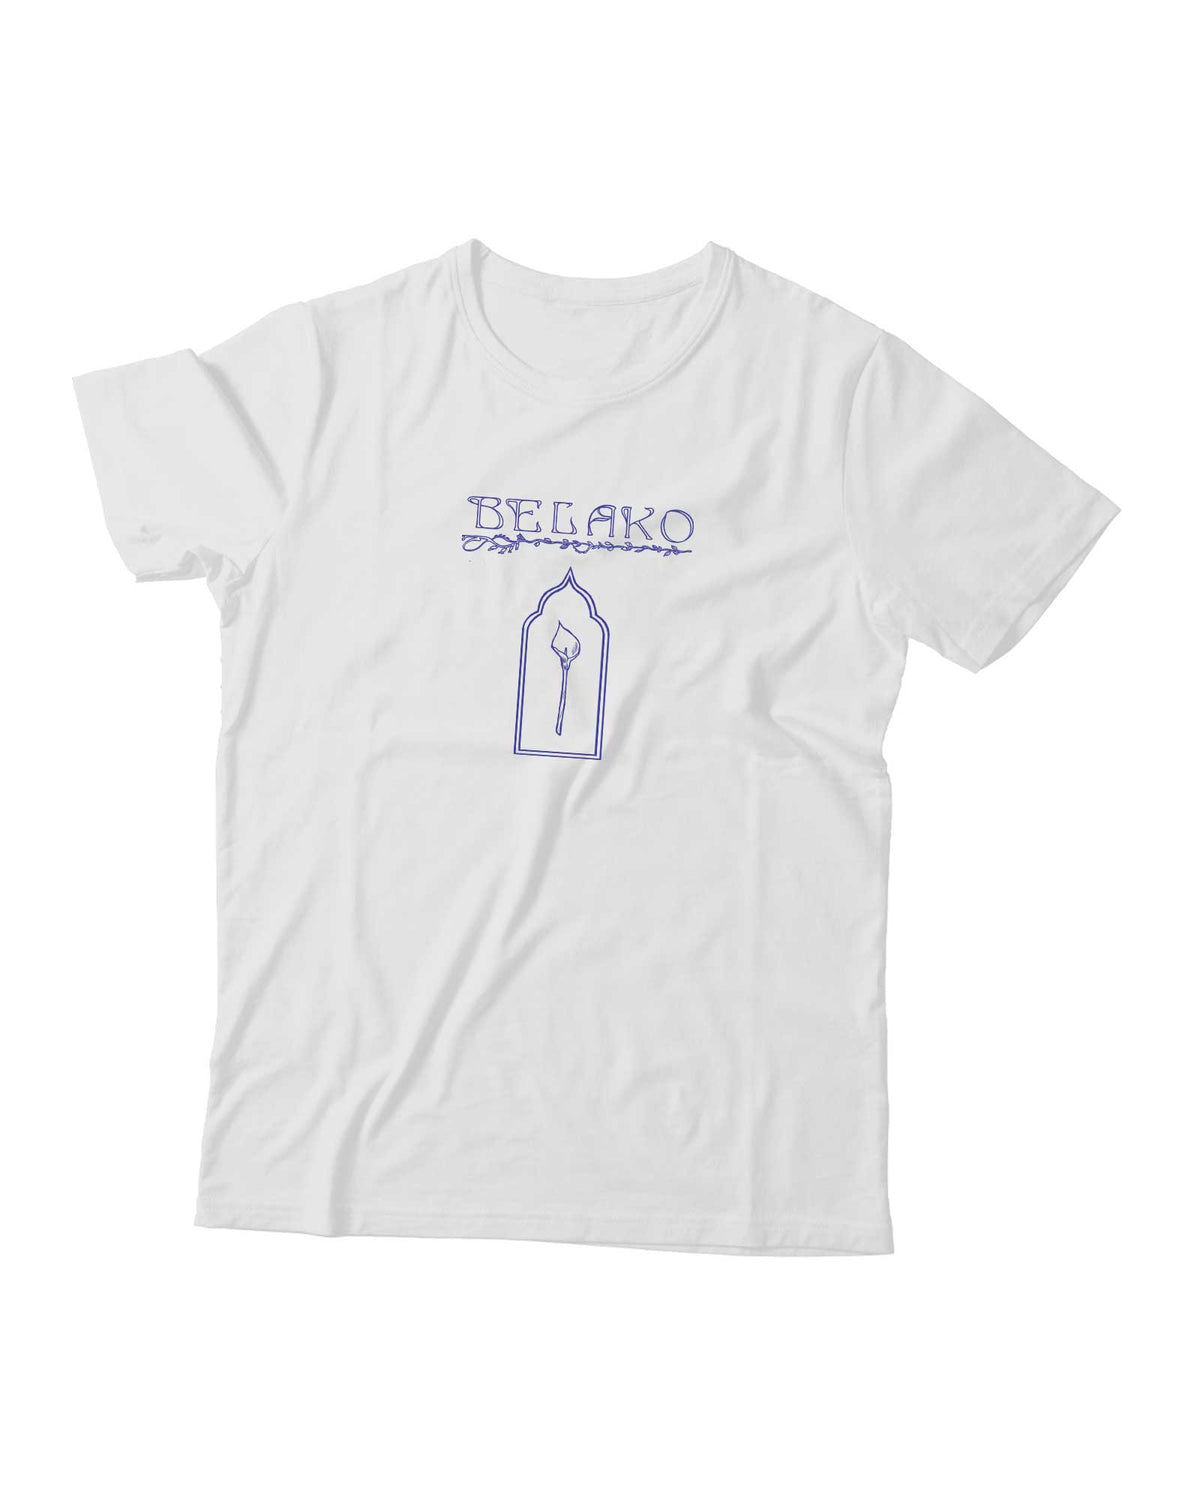 Belako - Camiseta "Sigo Regando" Blanca - D2fy · Rocktud - Belako